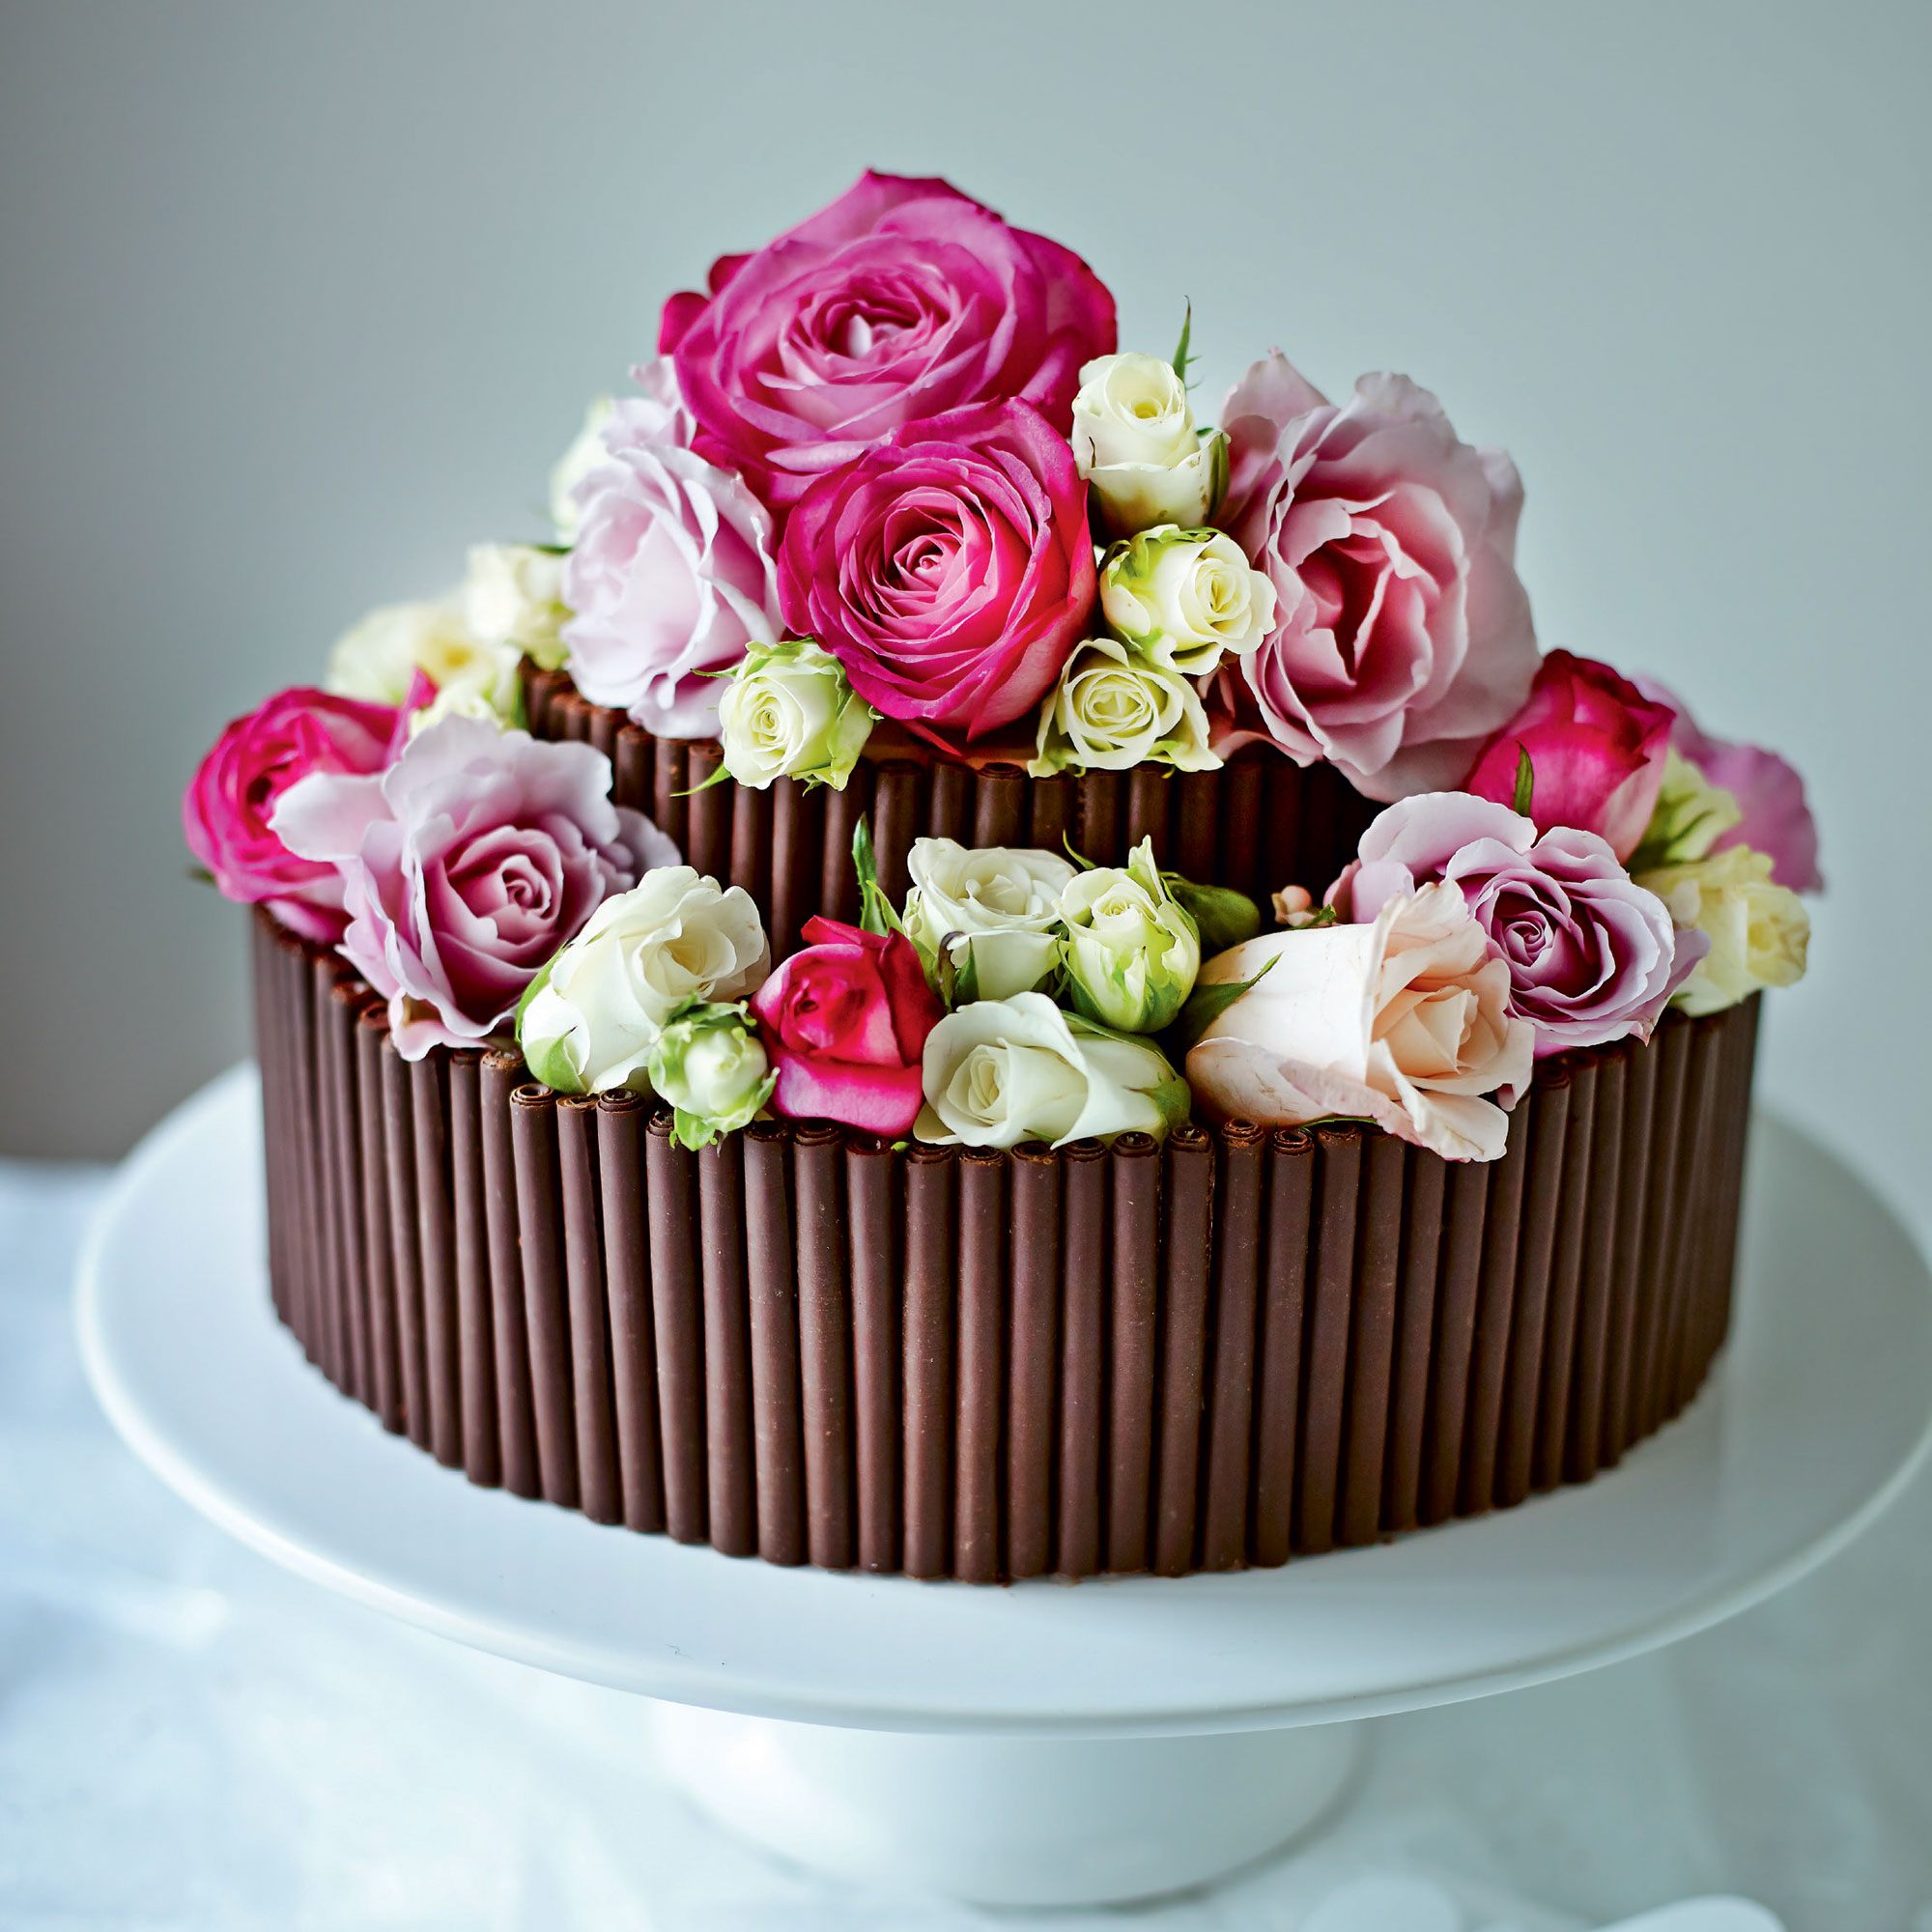 rose-and-chocolate-wedding-cake.jpg